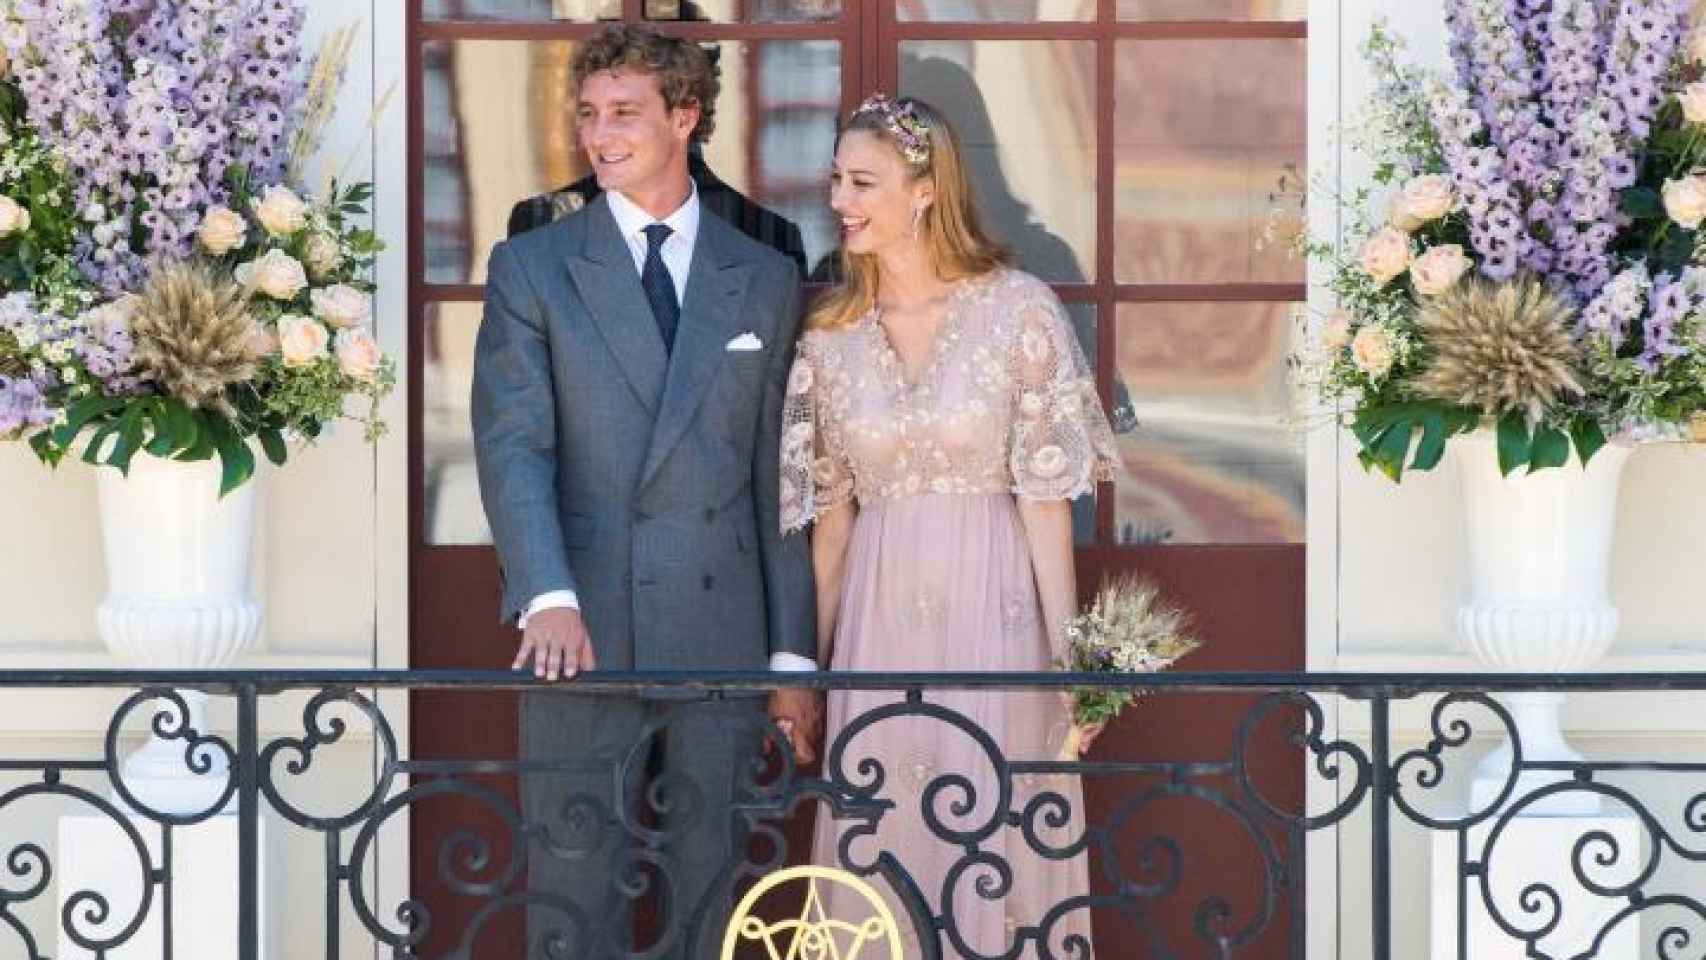 Beatrice Borromeo con vestido de Valentino asomada al balcón junto a Pierre Casiraghi